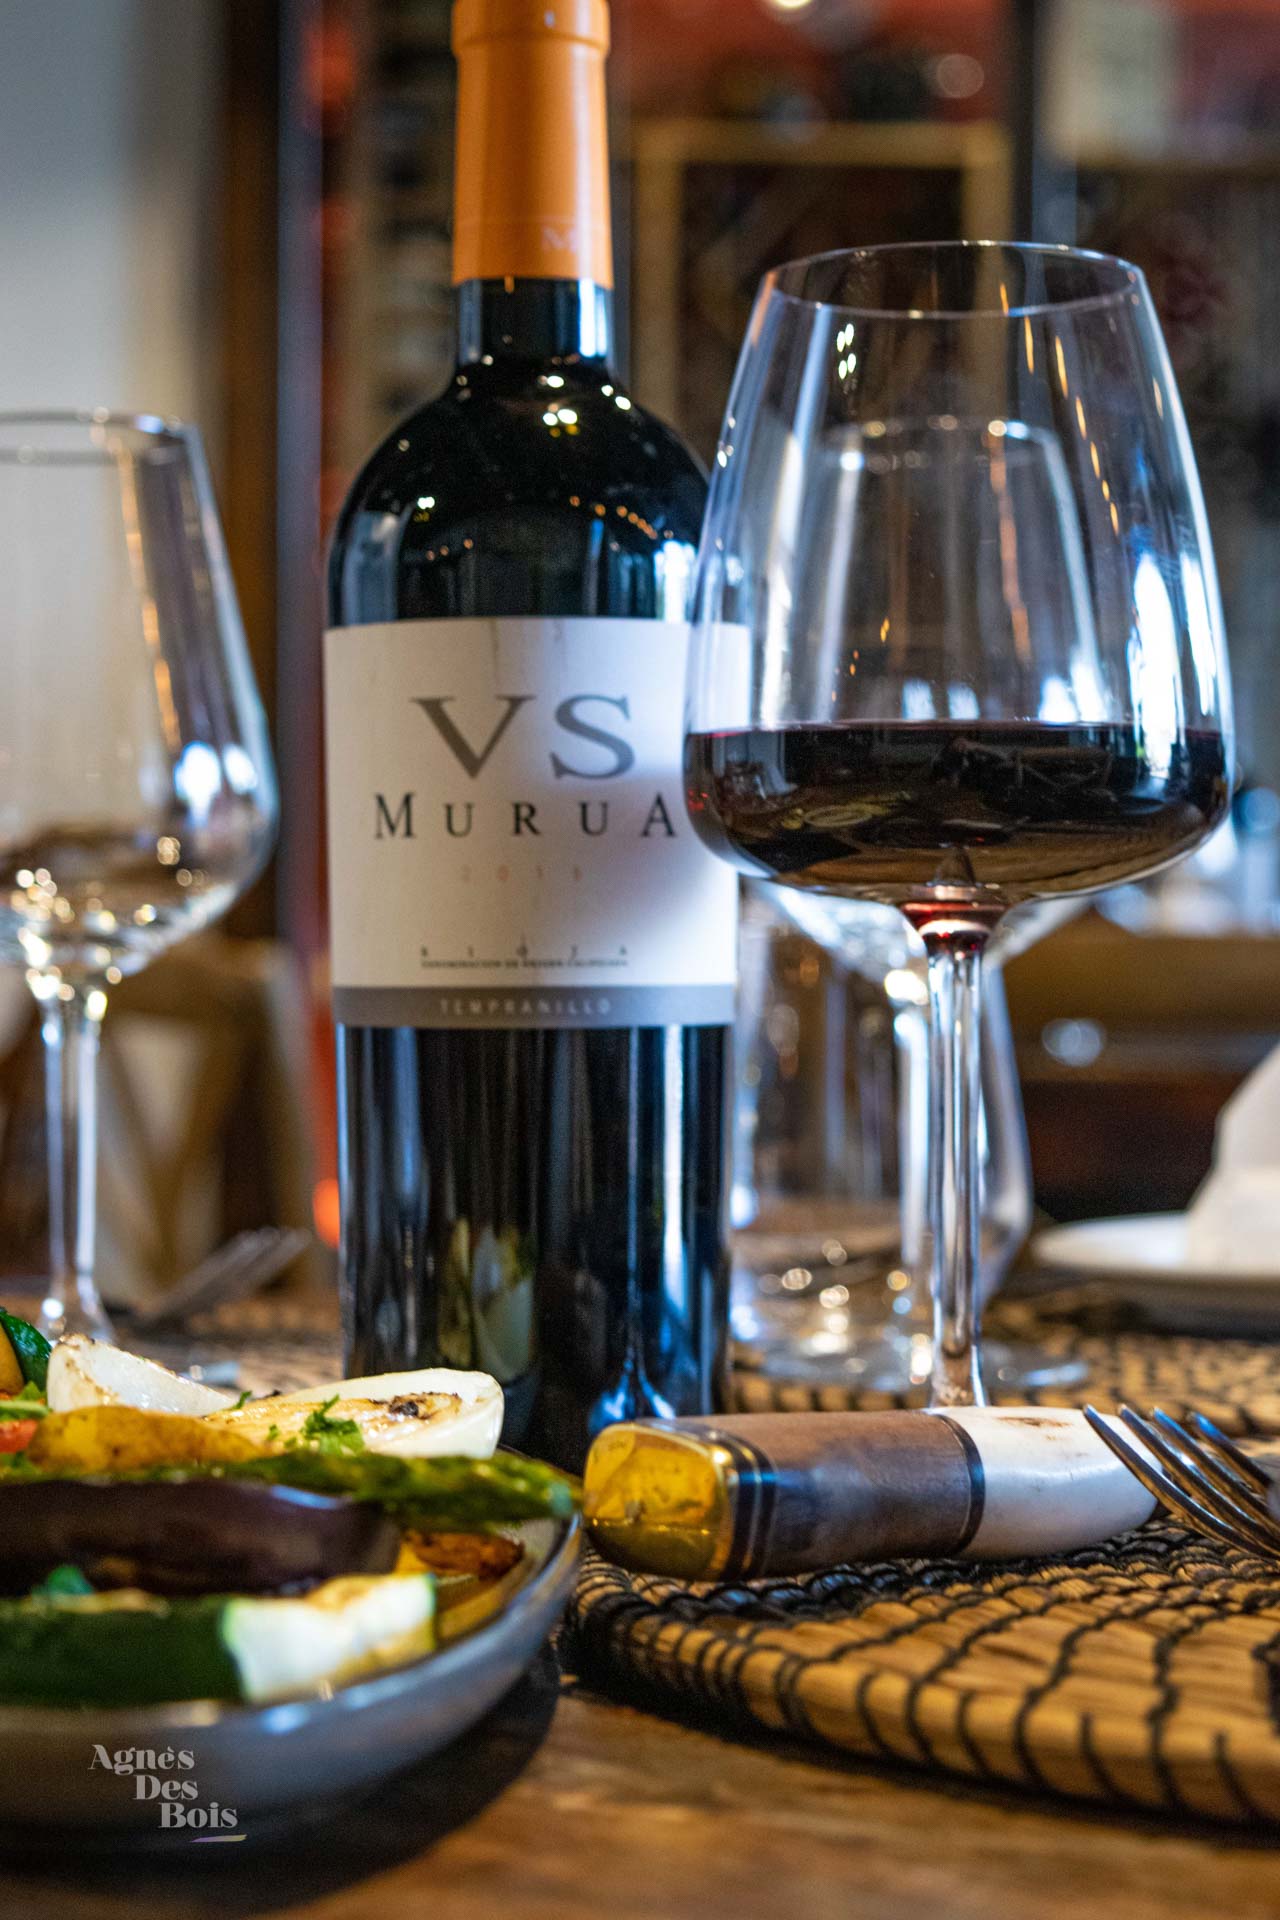 Argentinian Asado with Murua VS Wine